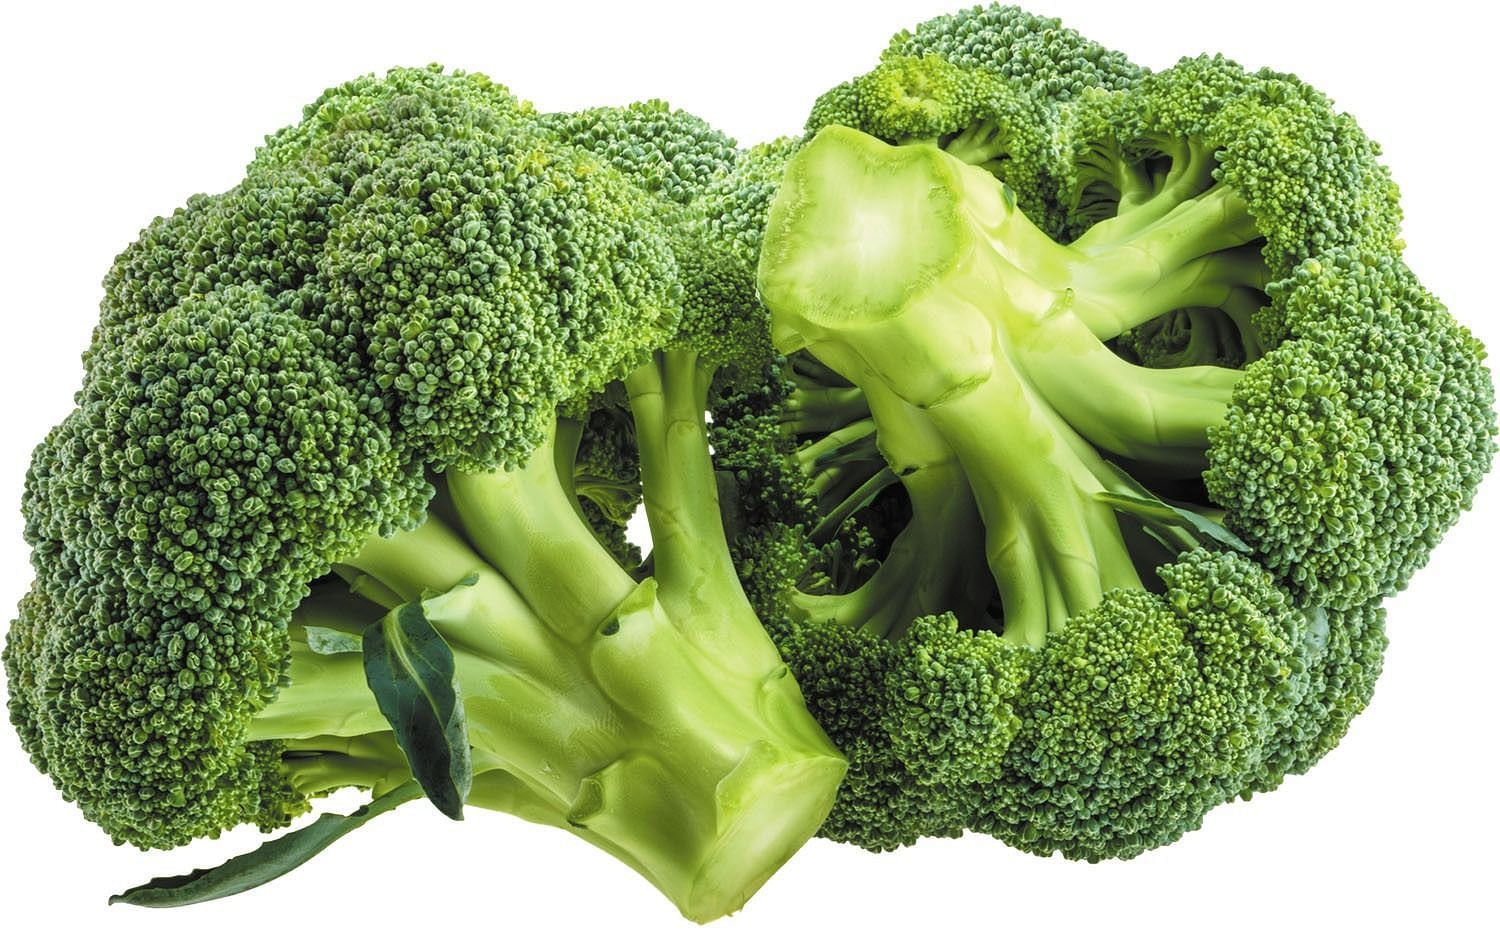 Broccoli (Image via Getty Images)